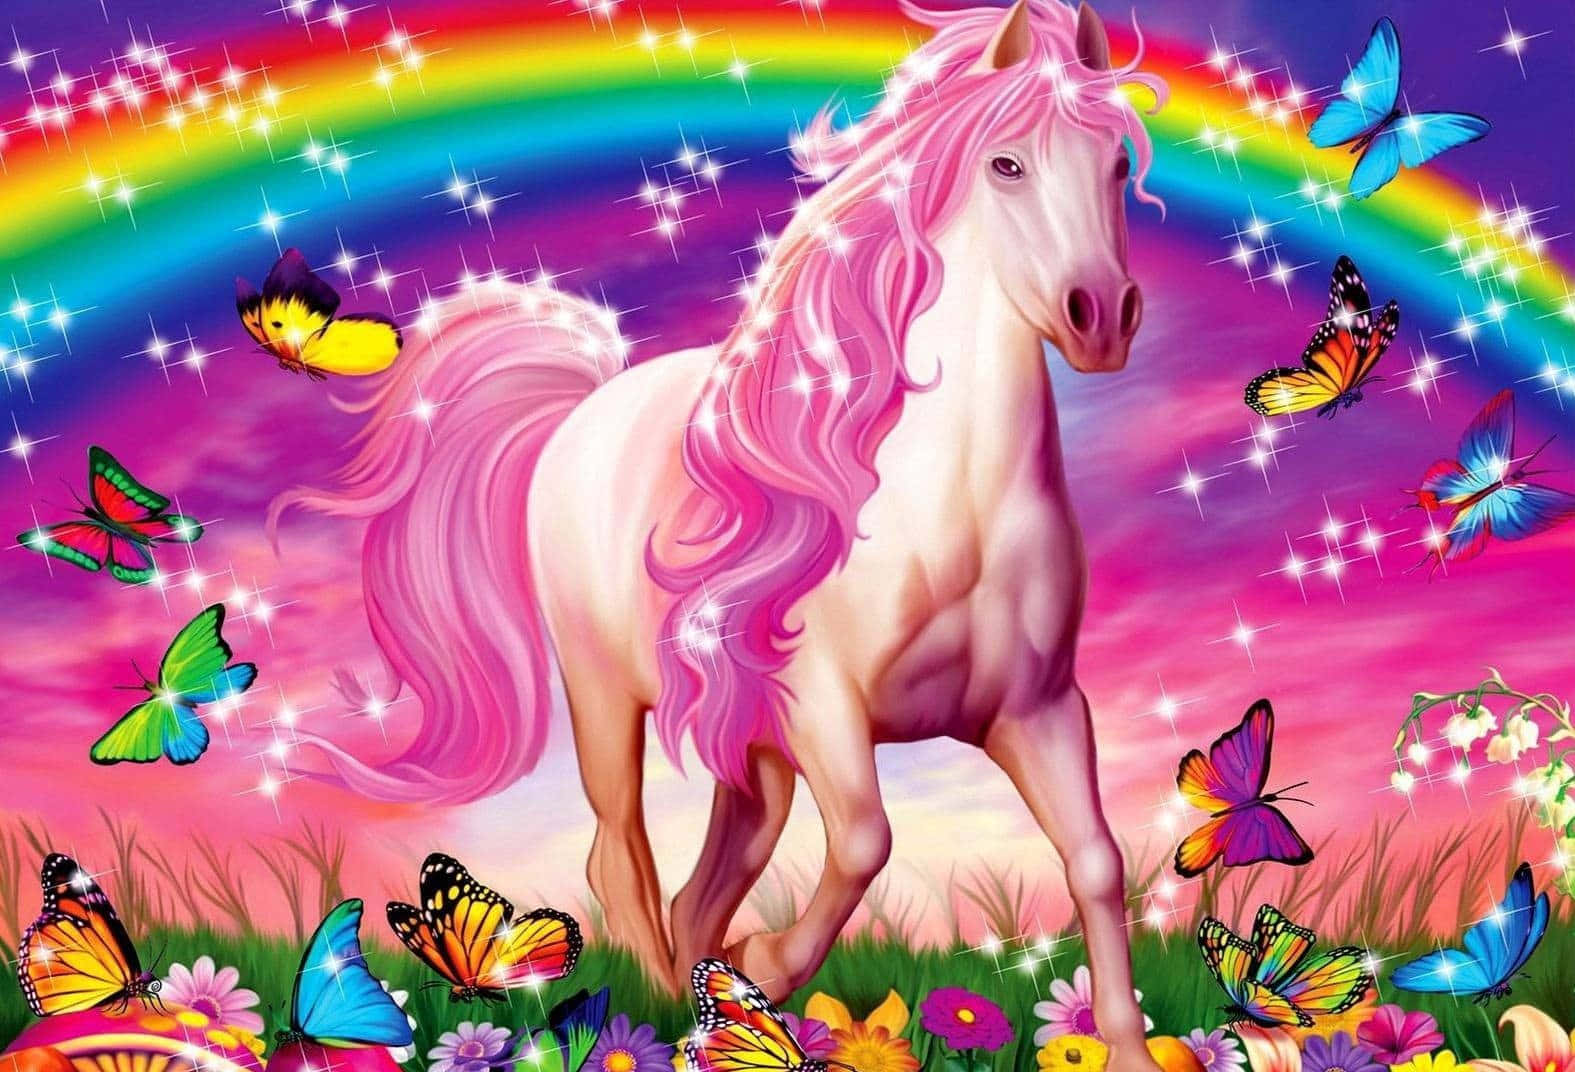 A magical unicorn galloping along a pristine rainbow path